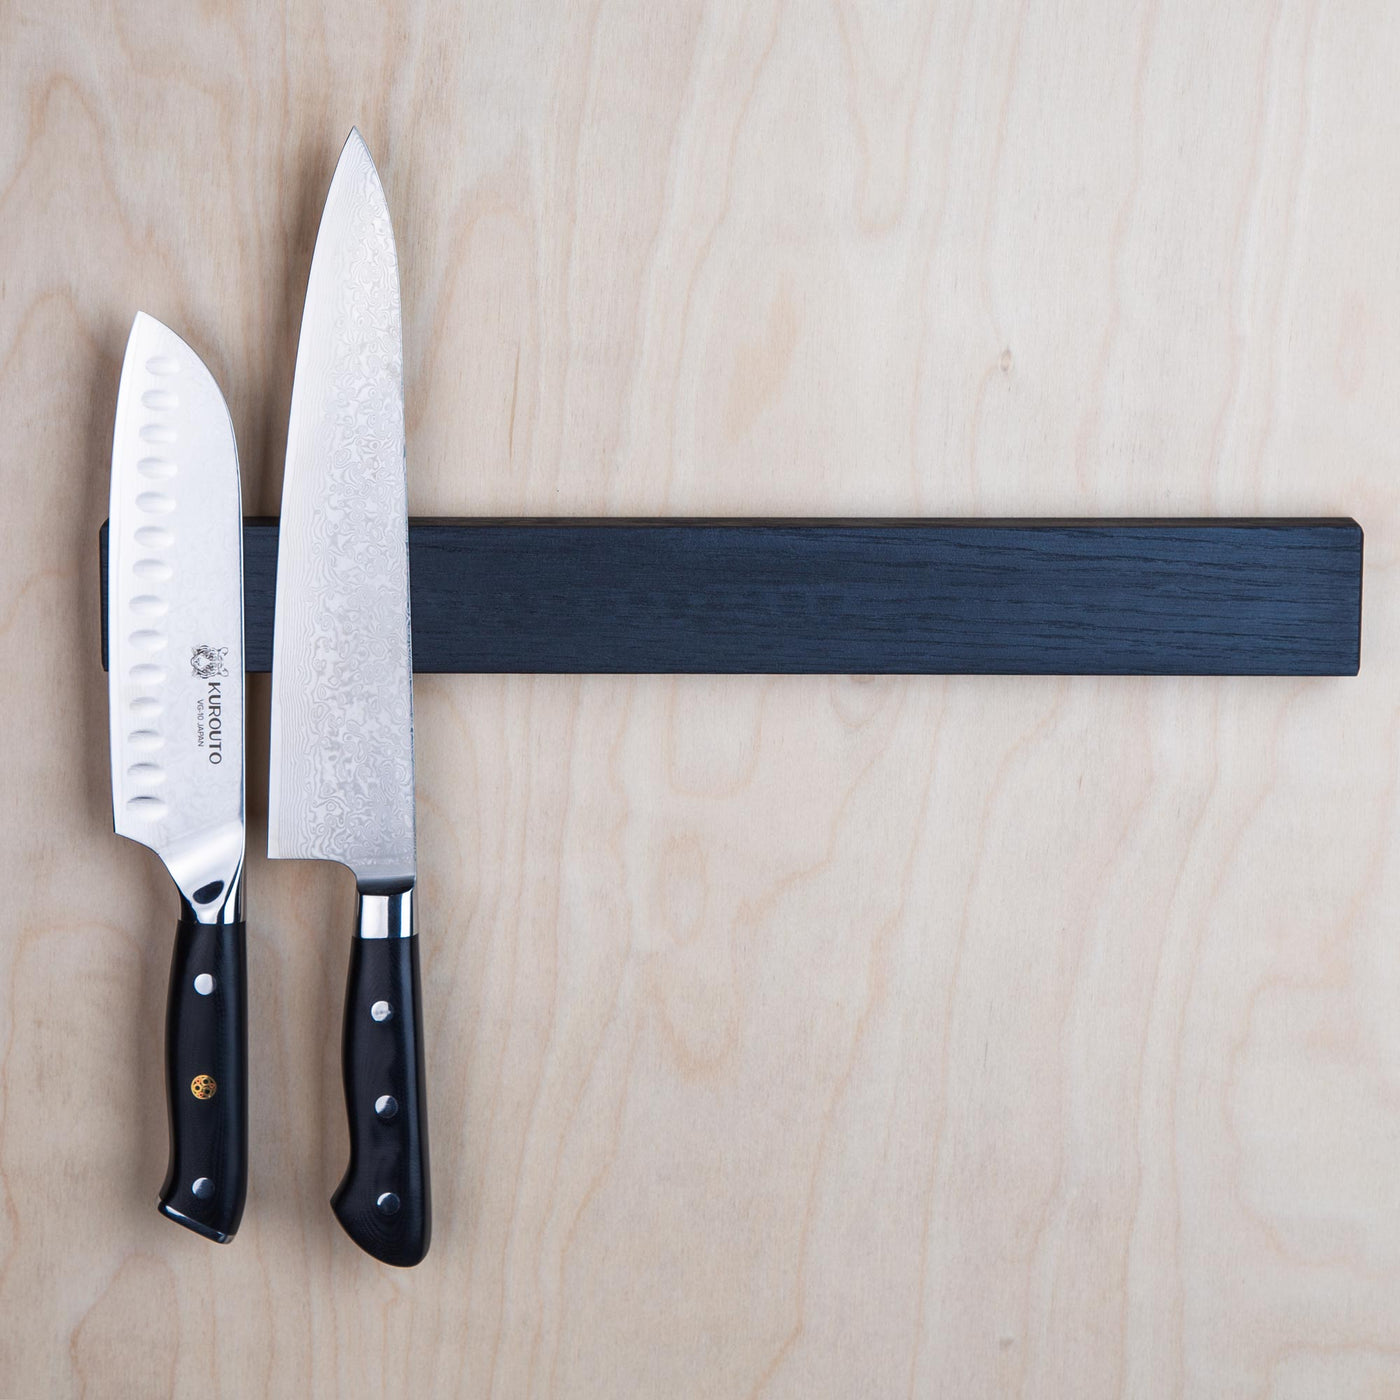 Knife Block Without Knives - 16-Slot - Knife Holder & Knife Block Only